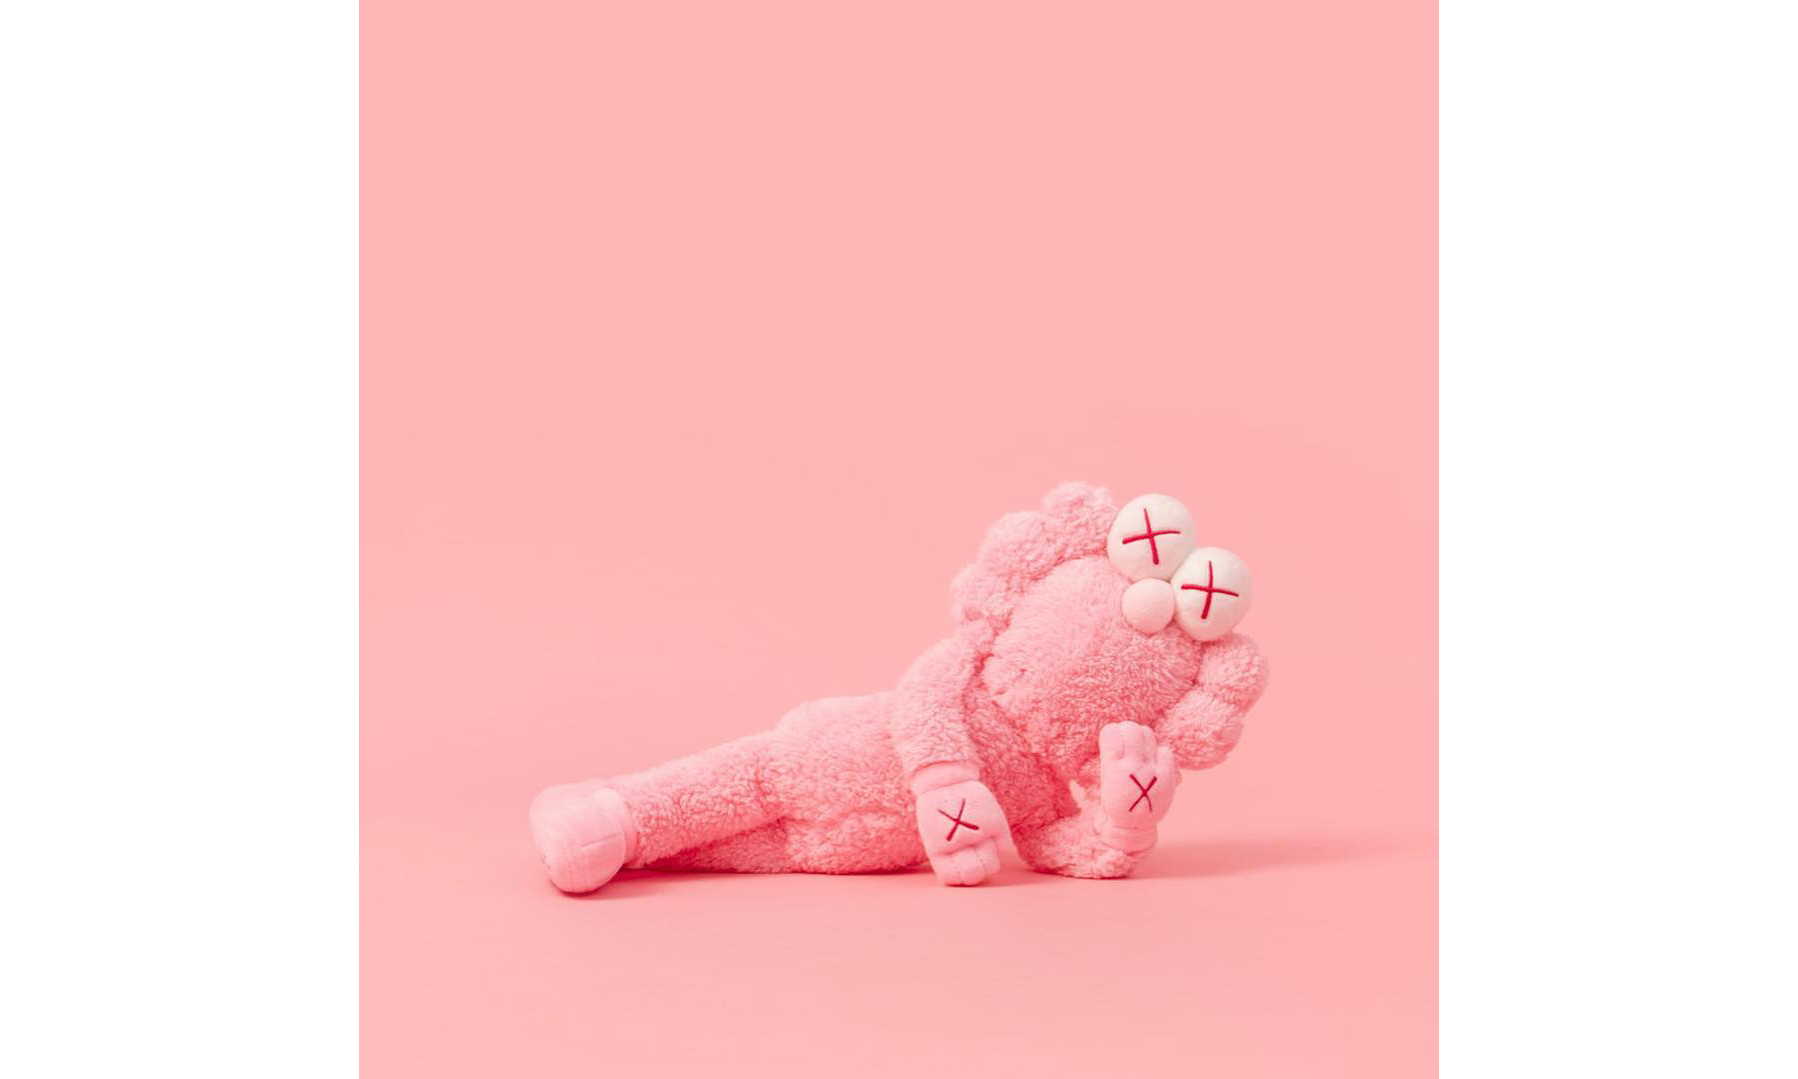 dior 亲民版?kaws 宣布粉色 bff 毛绒玩偶将于明日发售